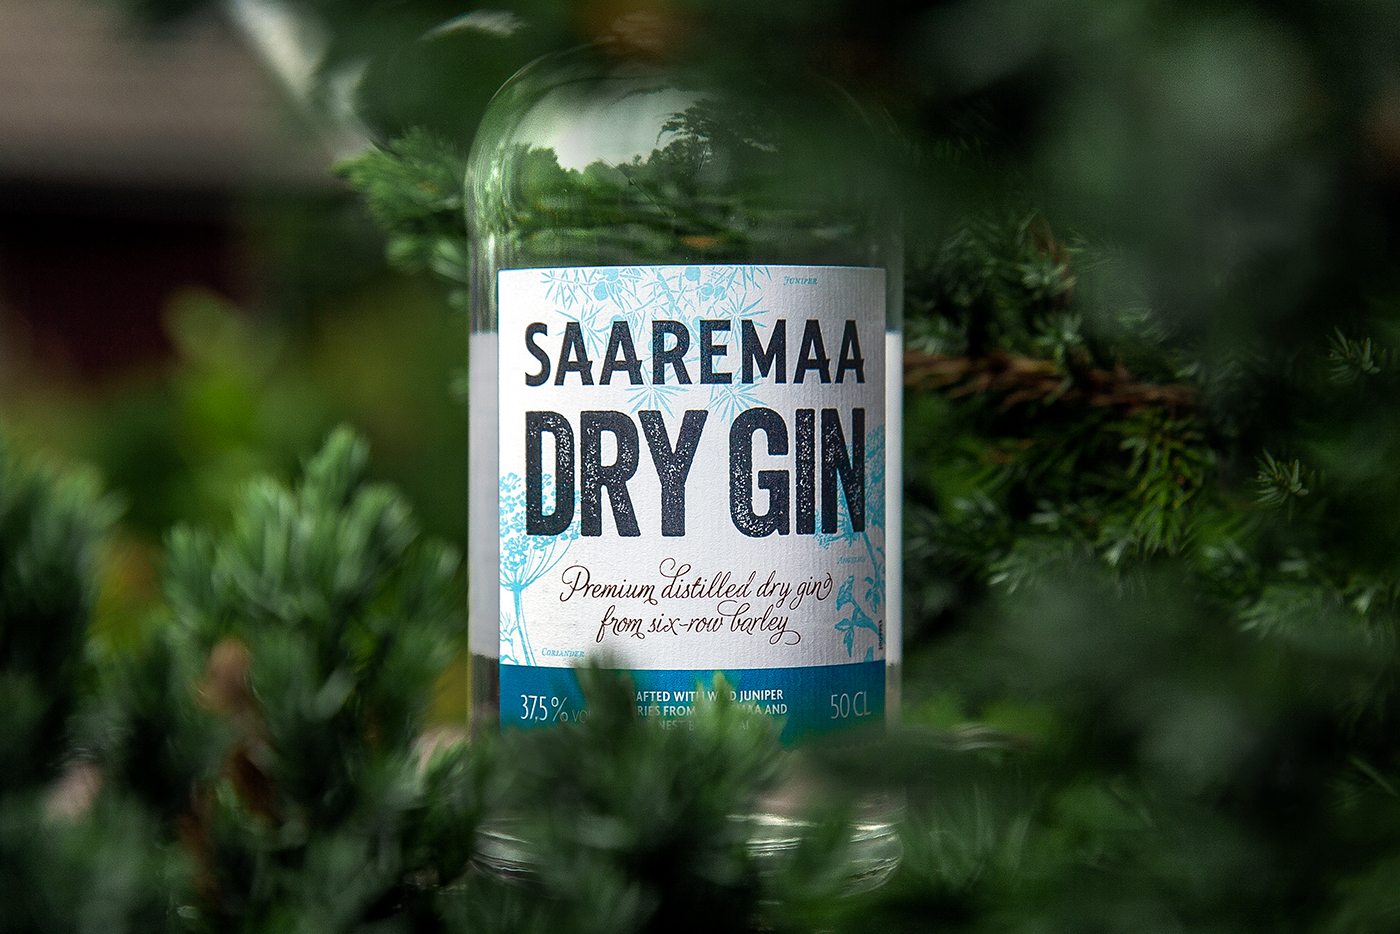 Saaremaa Gin – Launch